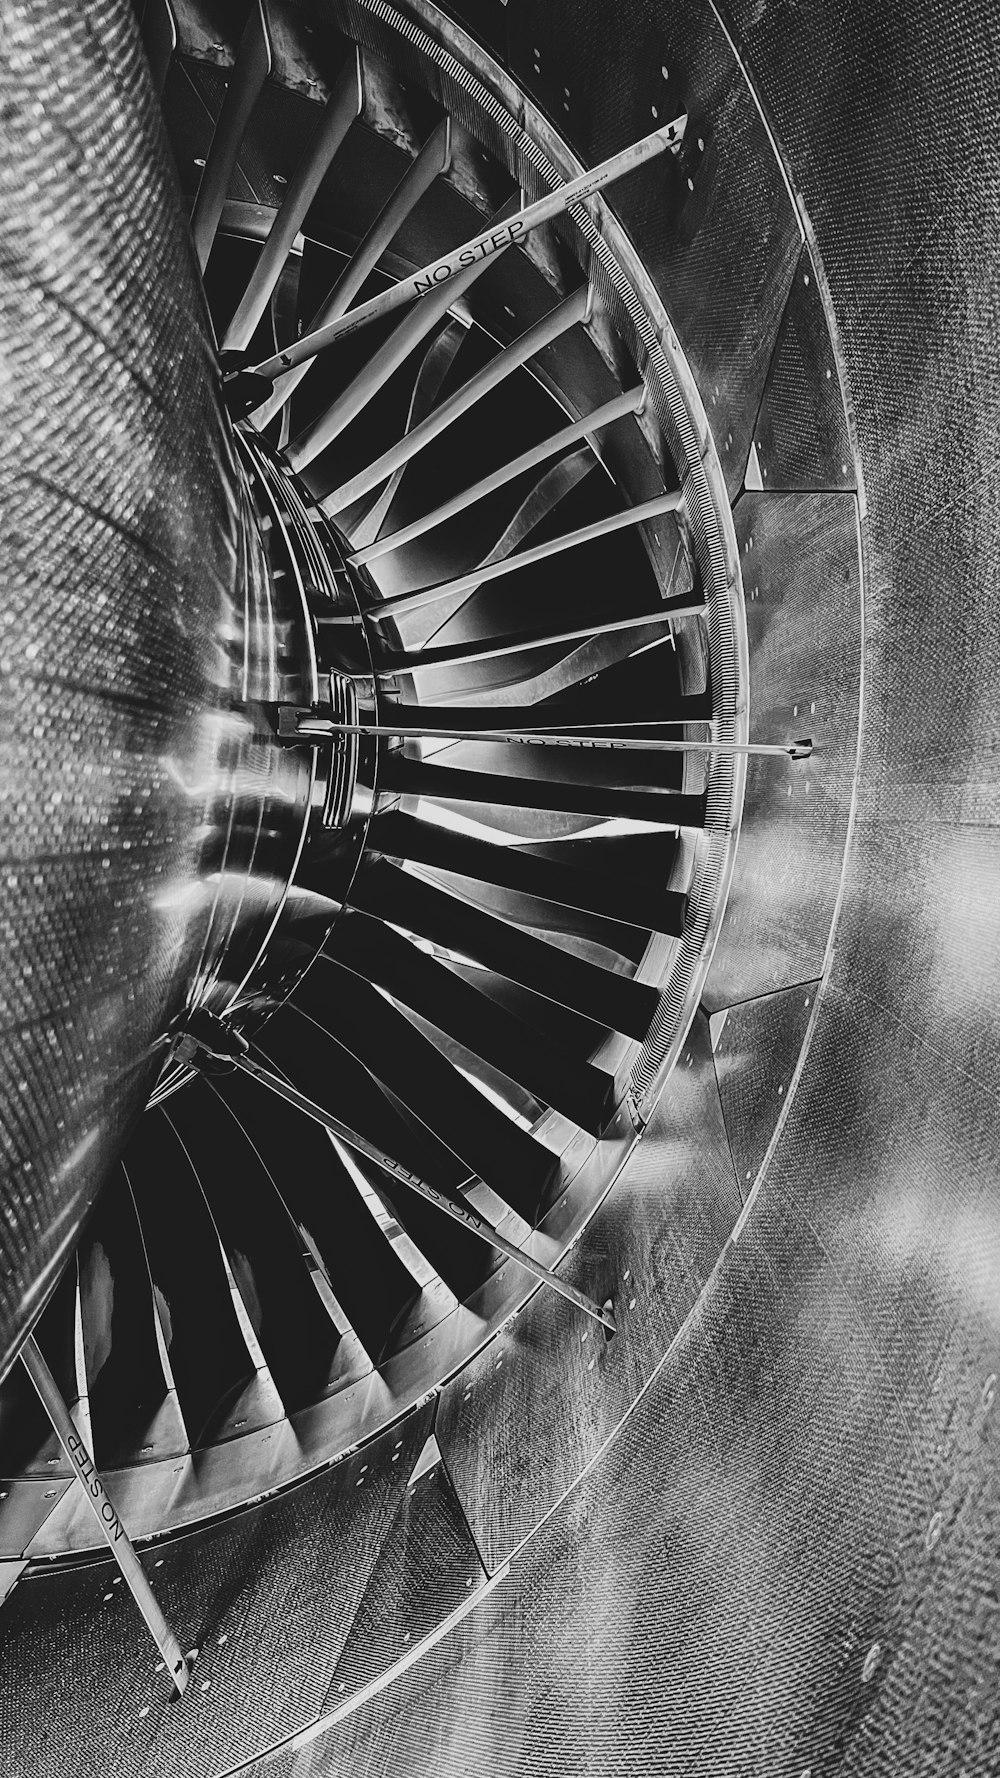 a black and white photo of a turbine